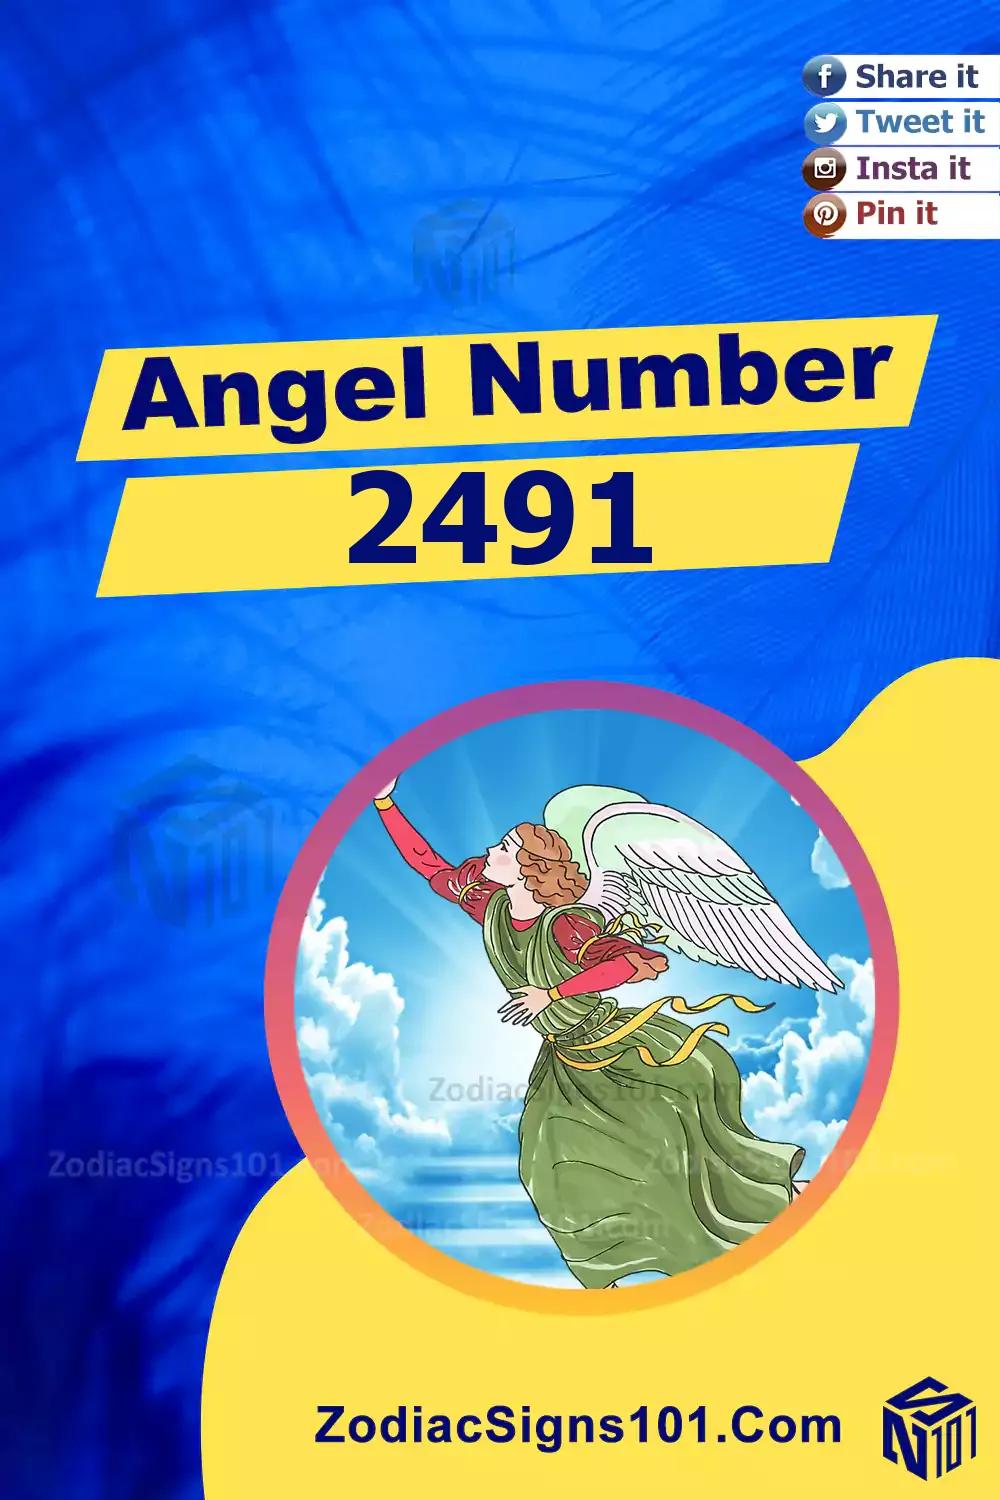 2491-Angel-Number-Meaning.jpg